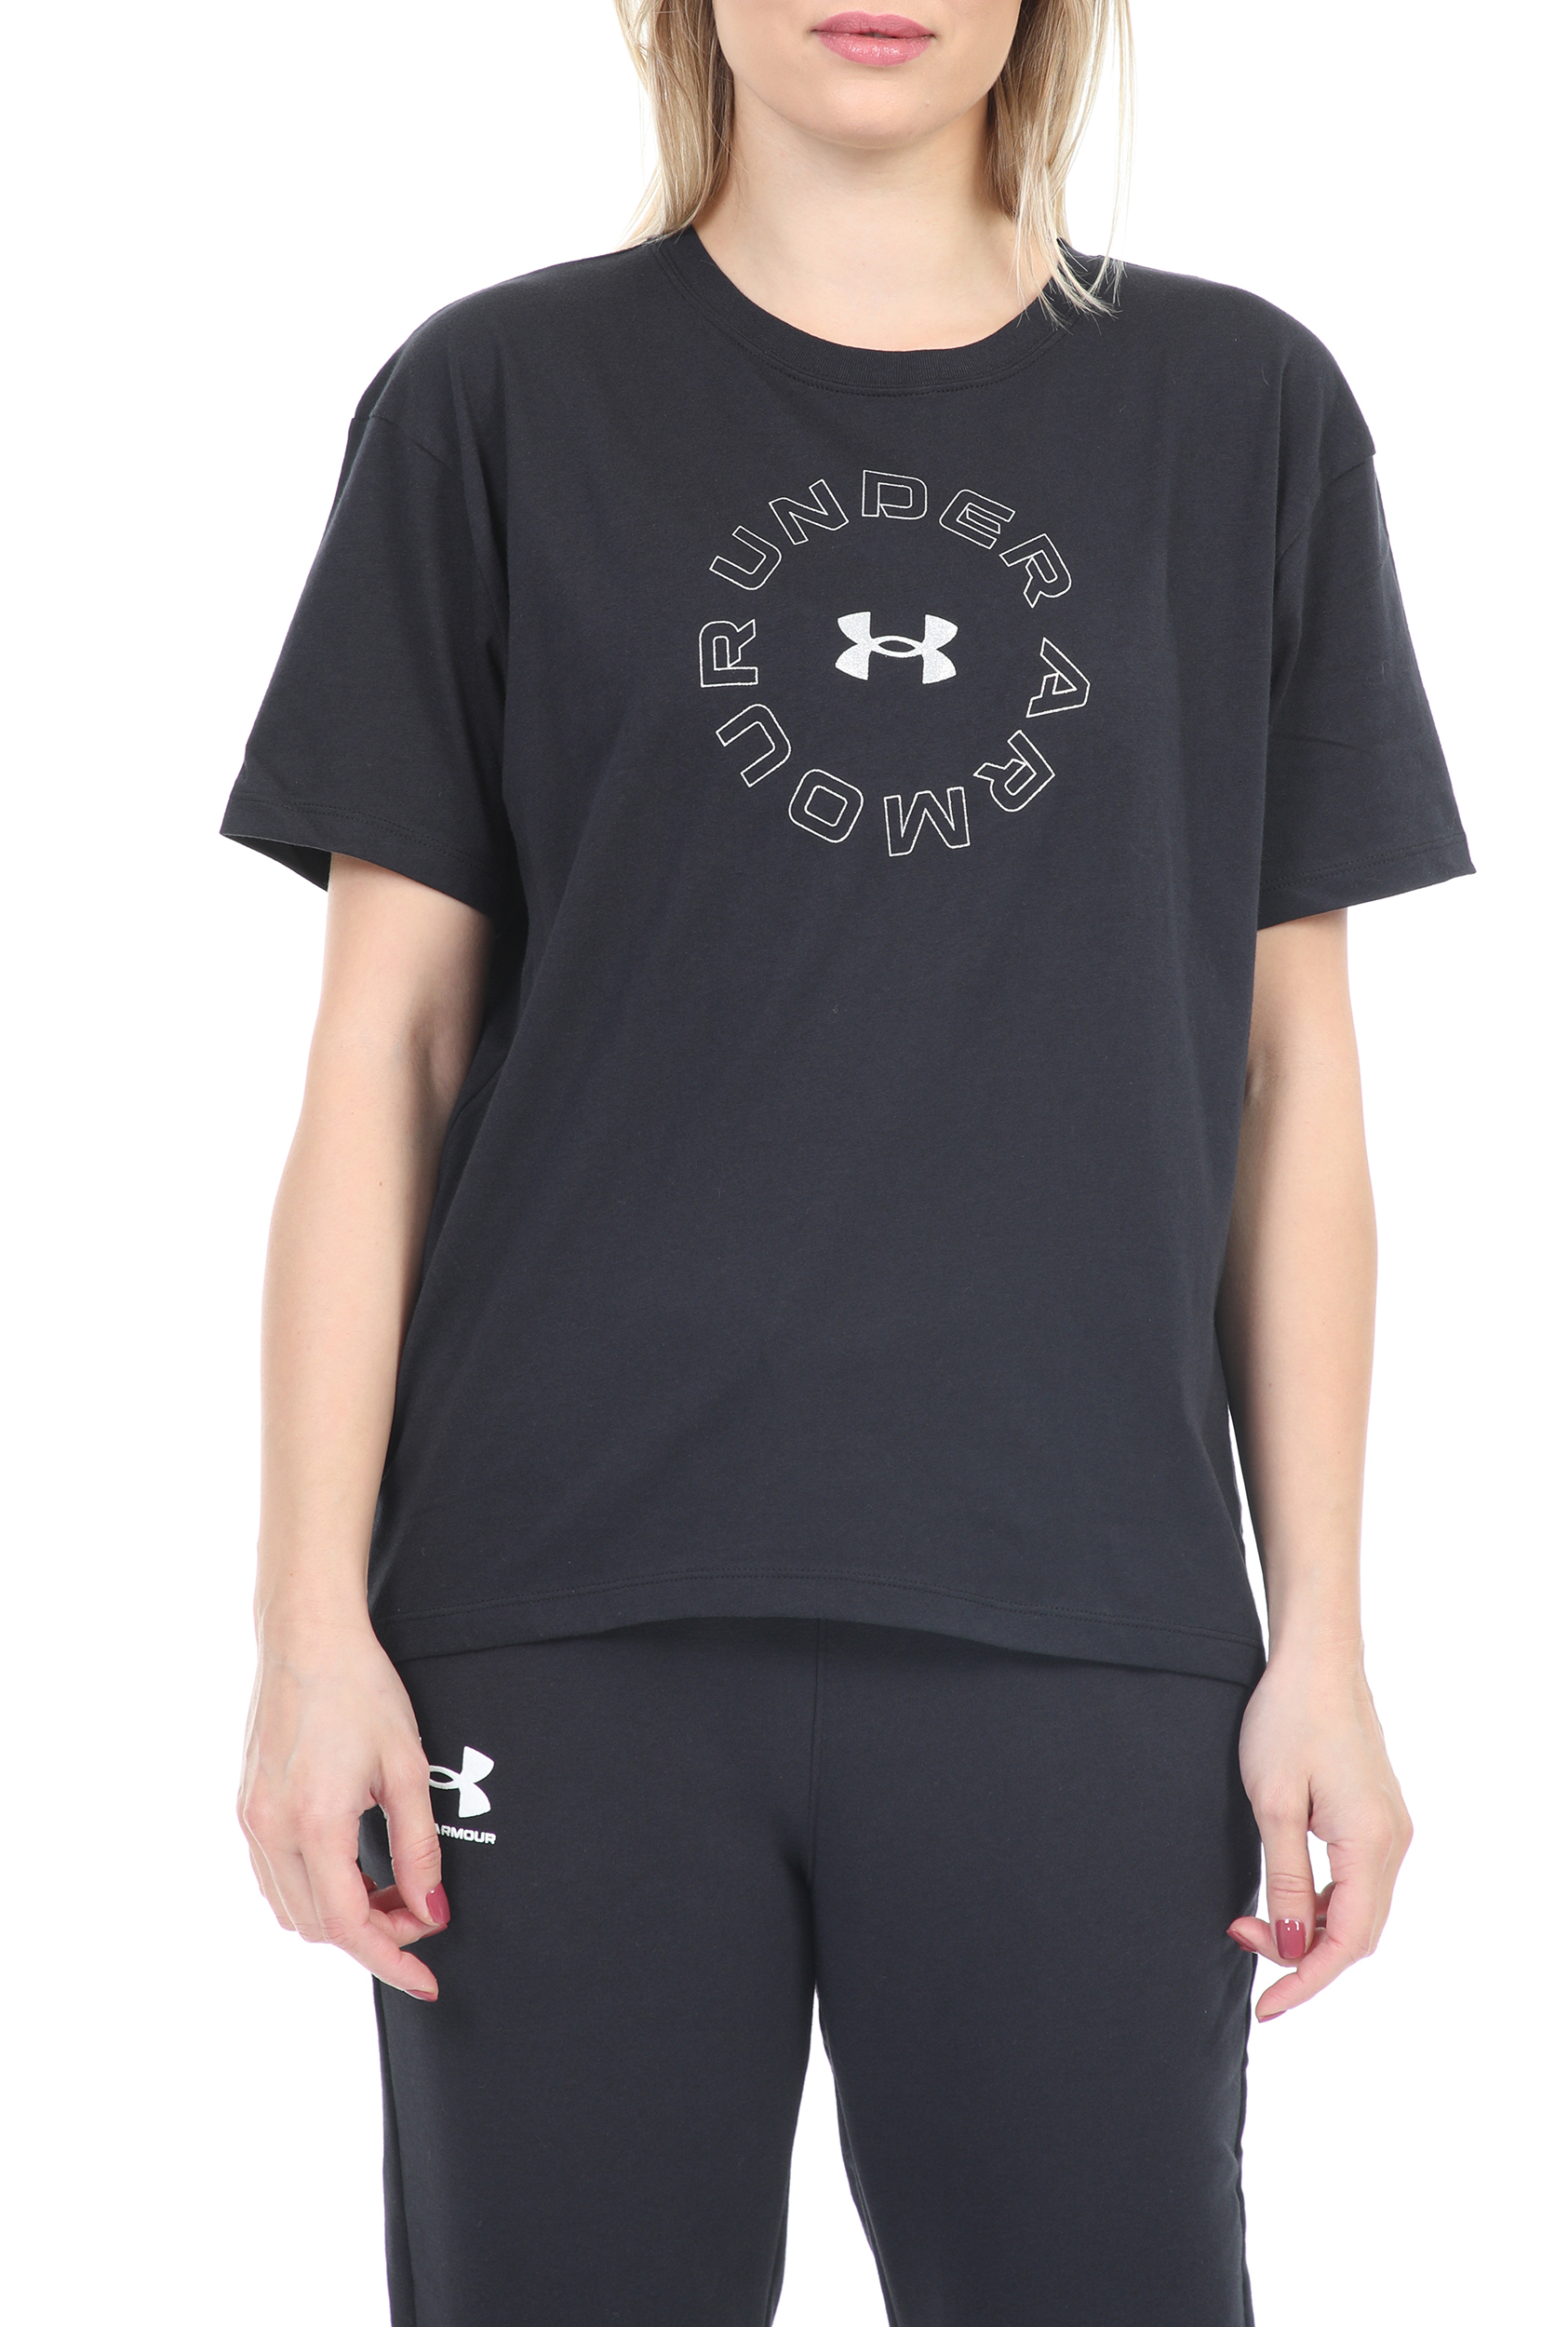 UNDER ARMOUR - Γυναικείο t-shirt UNDER ARMOUR Live Fashion μαύρο Γυναικεία/Ρούχα/Αθλητικά/T-shirt-Τοπ